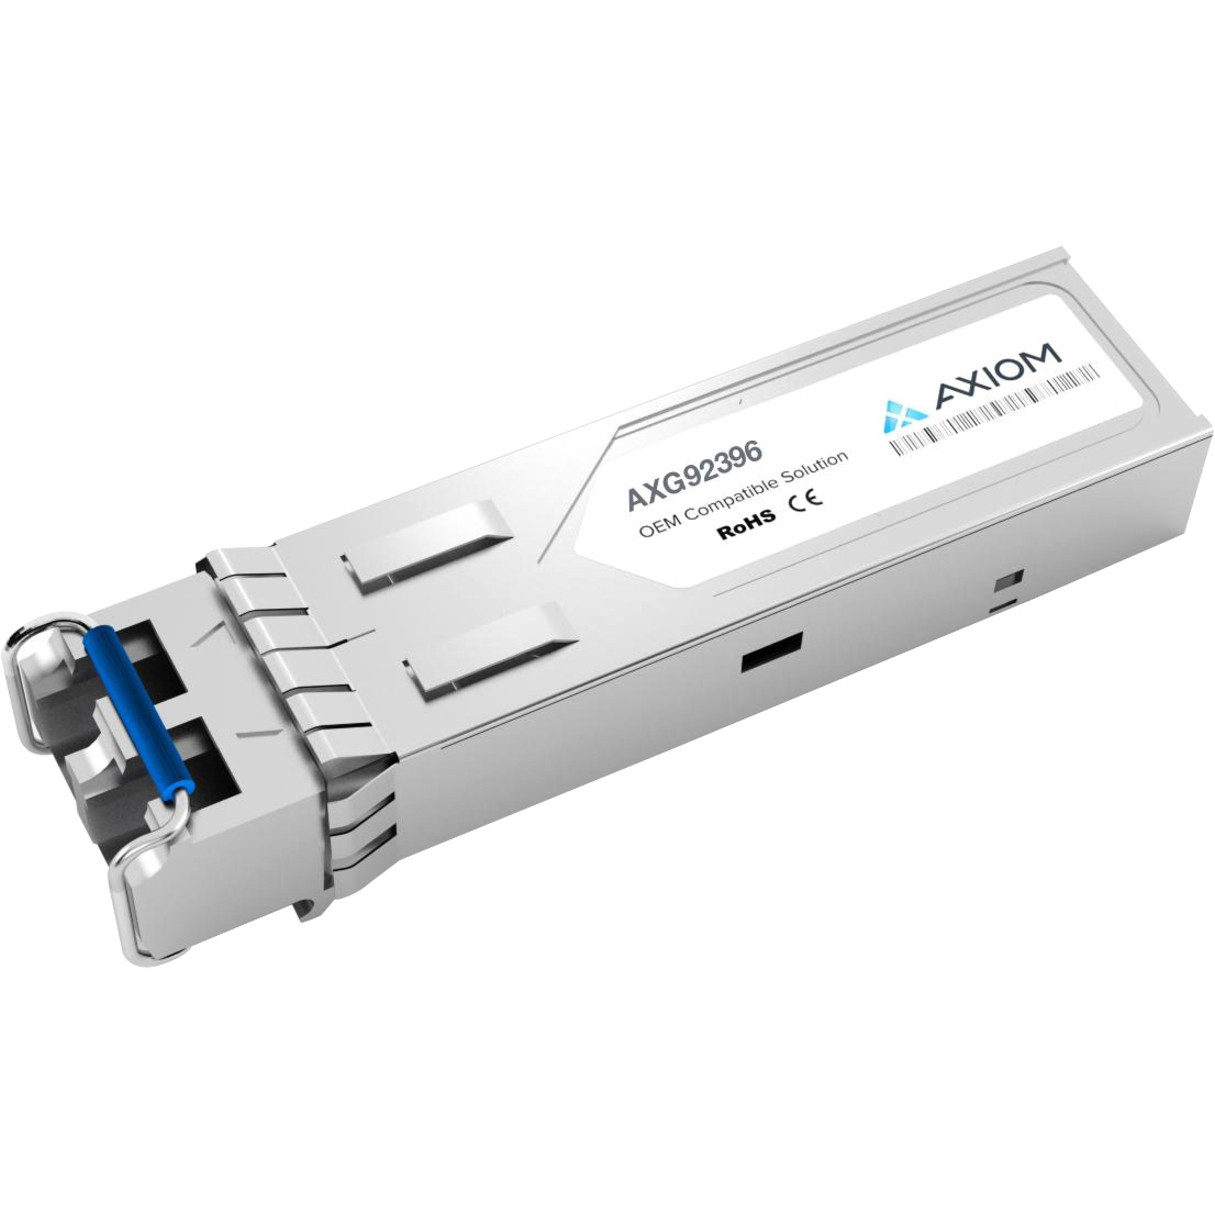 Axiom Memory Solutions 1000BASE-LX SFP Transceiver for Allied TelesisAT-SPLX10TAA Compliant100% Allied Telesis Comp 1000BASE-LX SFP AXG92396